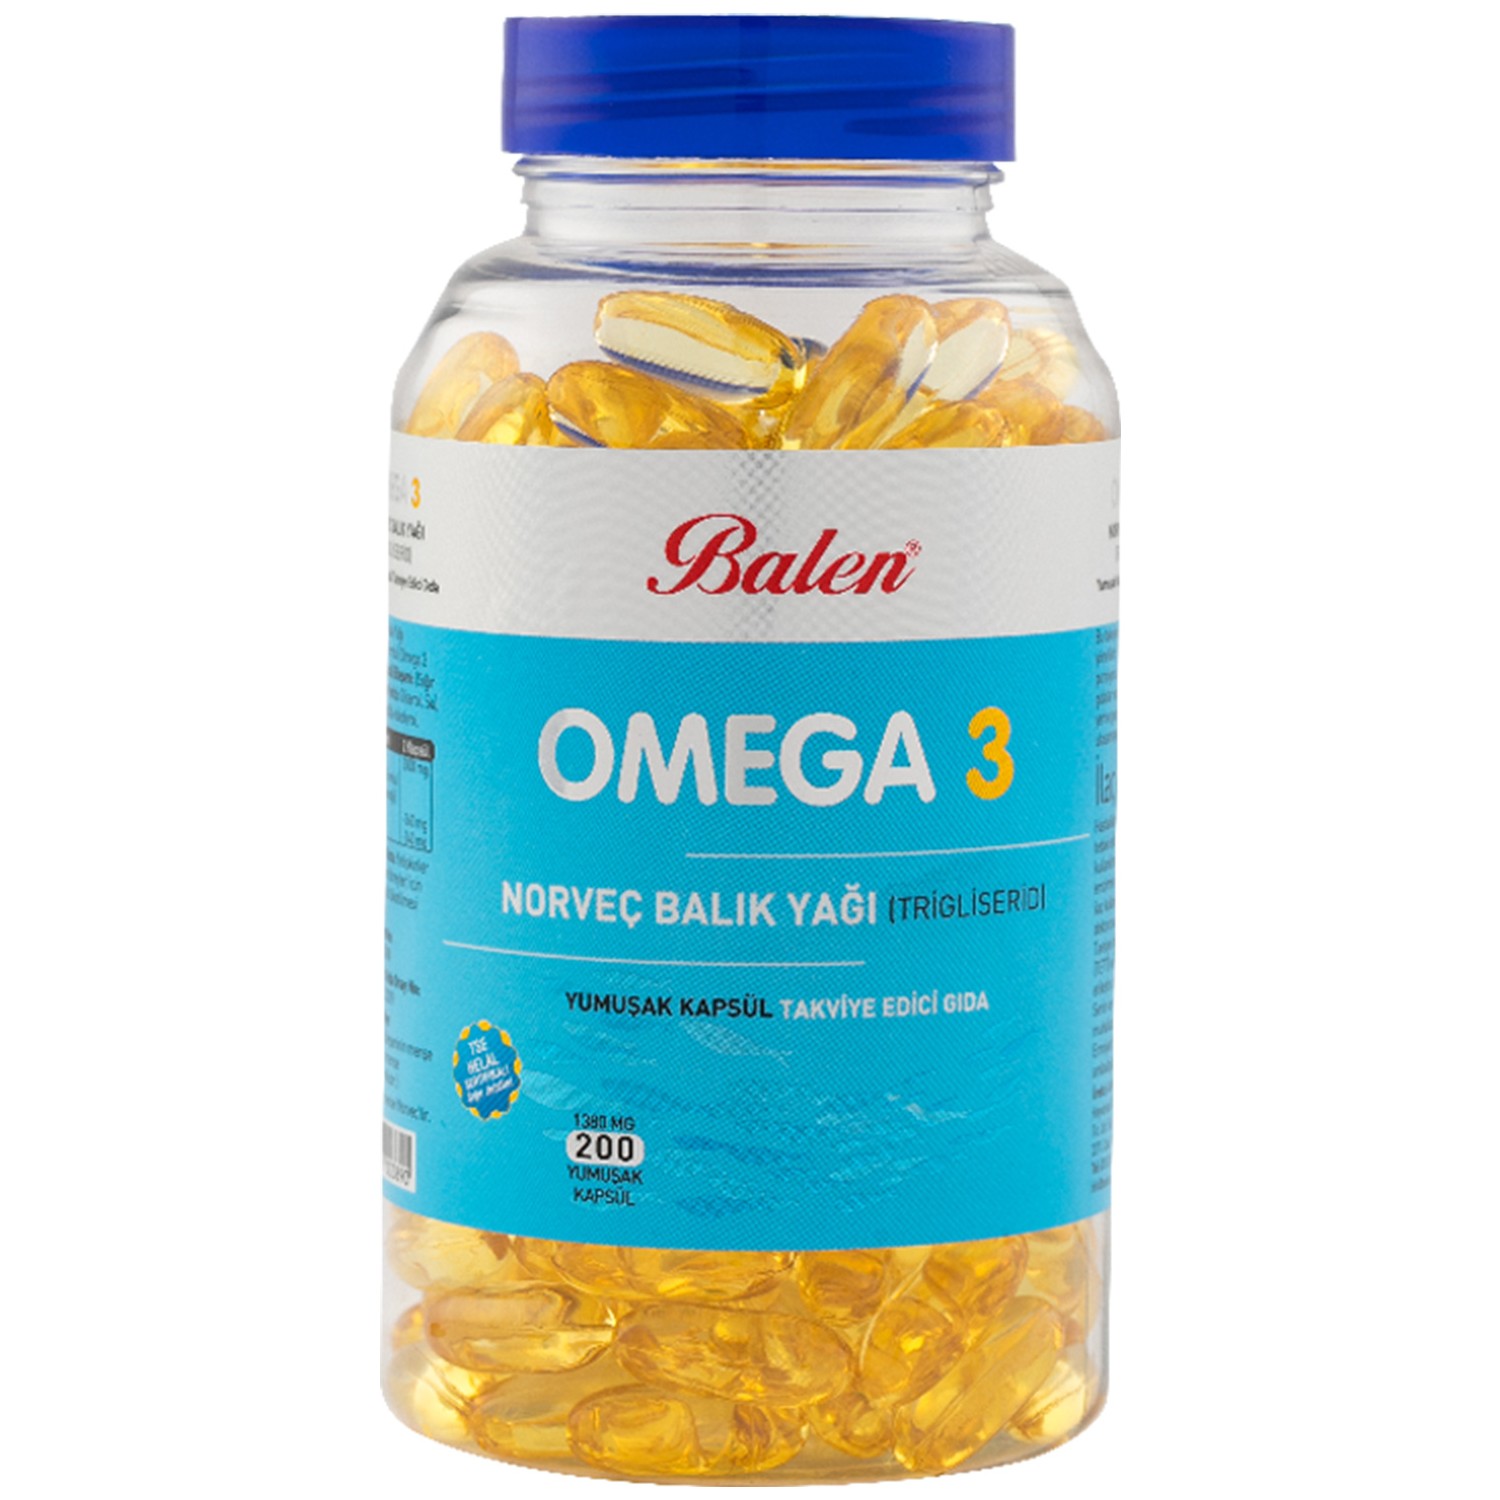 Рыбий жир Balen Omega 3, 200 капсул, 1380 мг норвежский рыбий жир balen omega 3 триглицерид 1380 мг 2 упаковки по 100 капсул